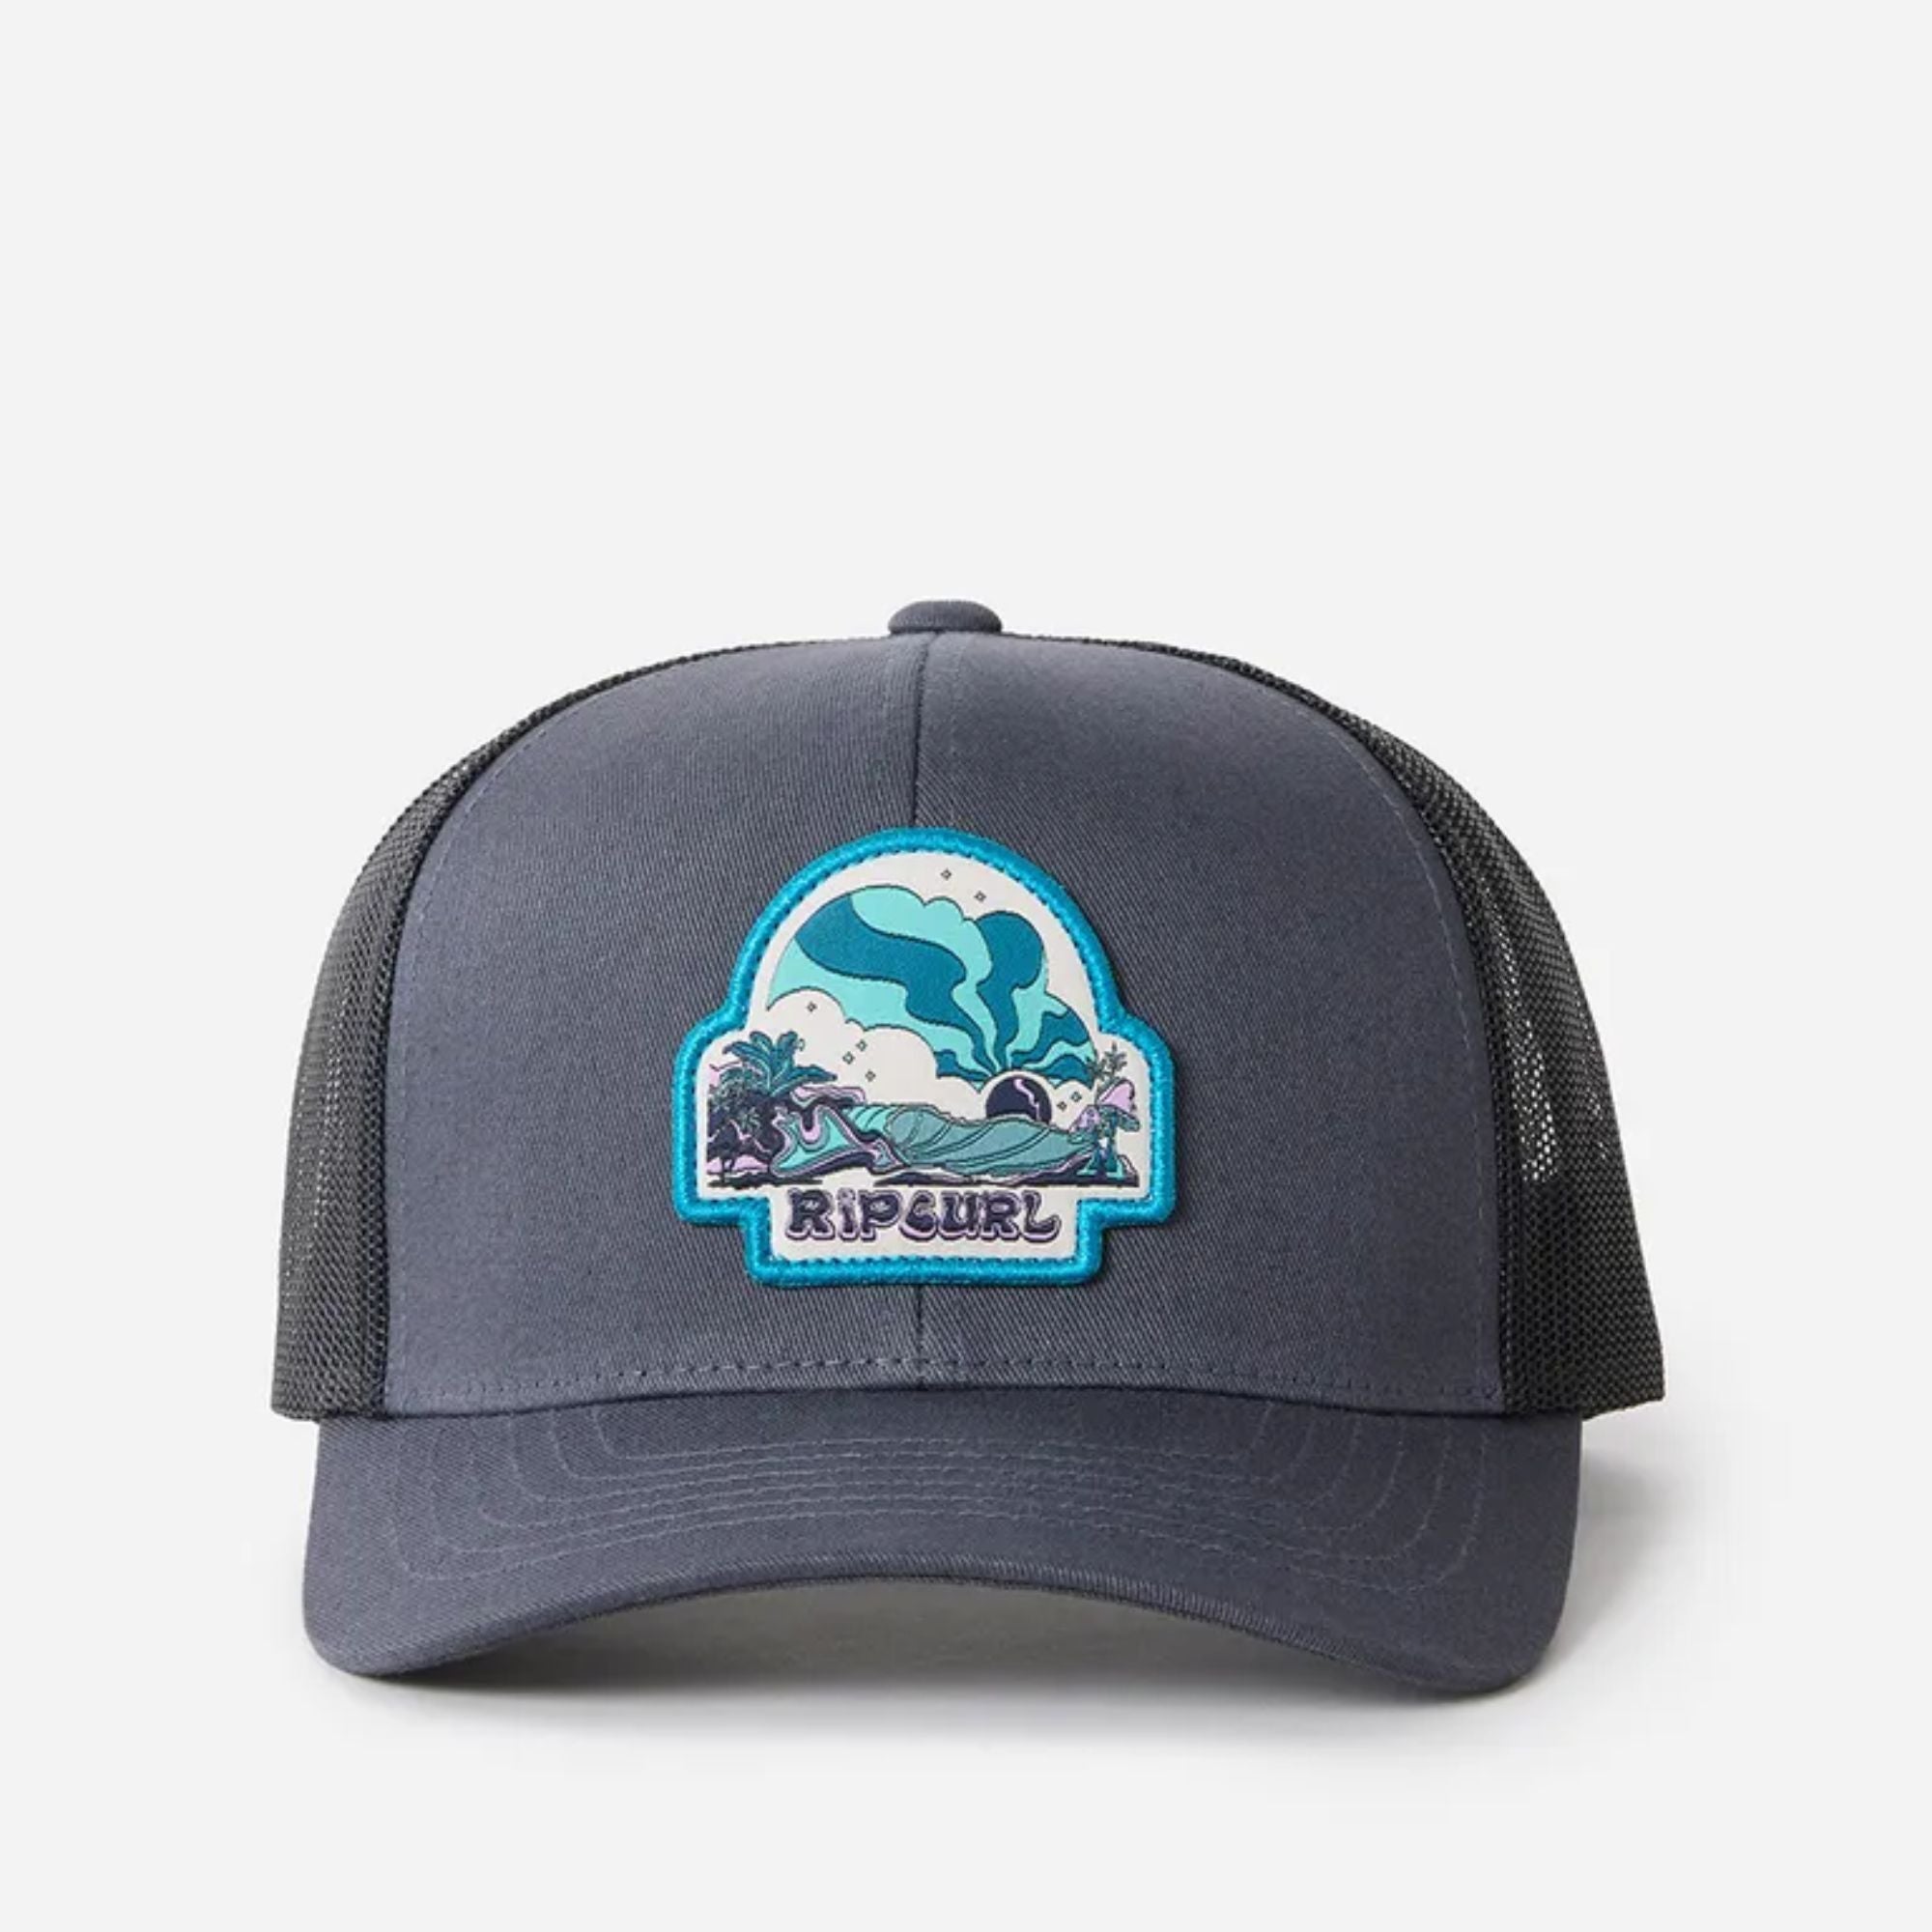 Ripcurl Custom Curve Trucker Hat | RIPCURL | Portwest - The Outdoor Shop